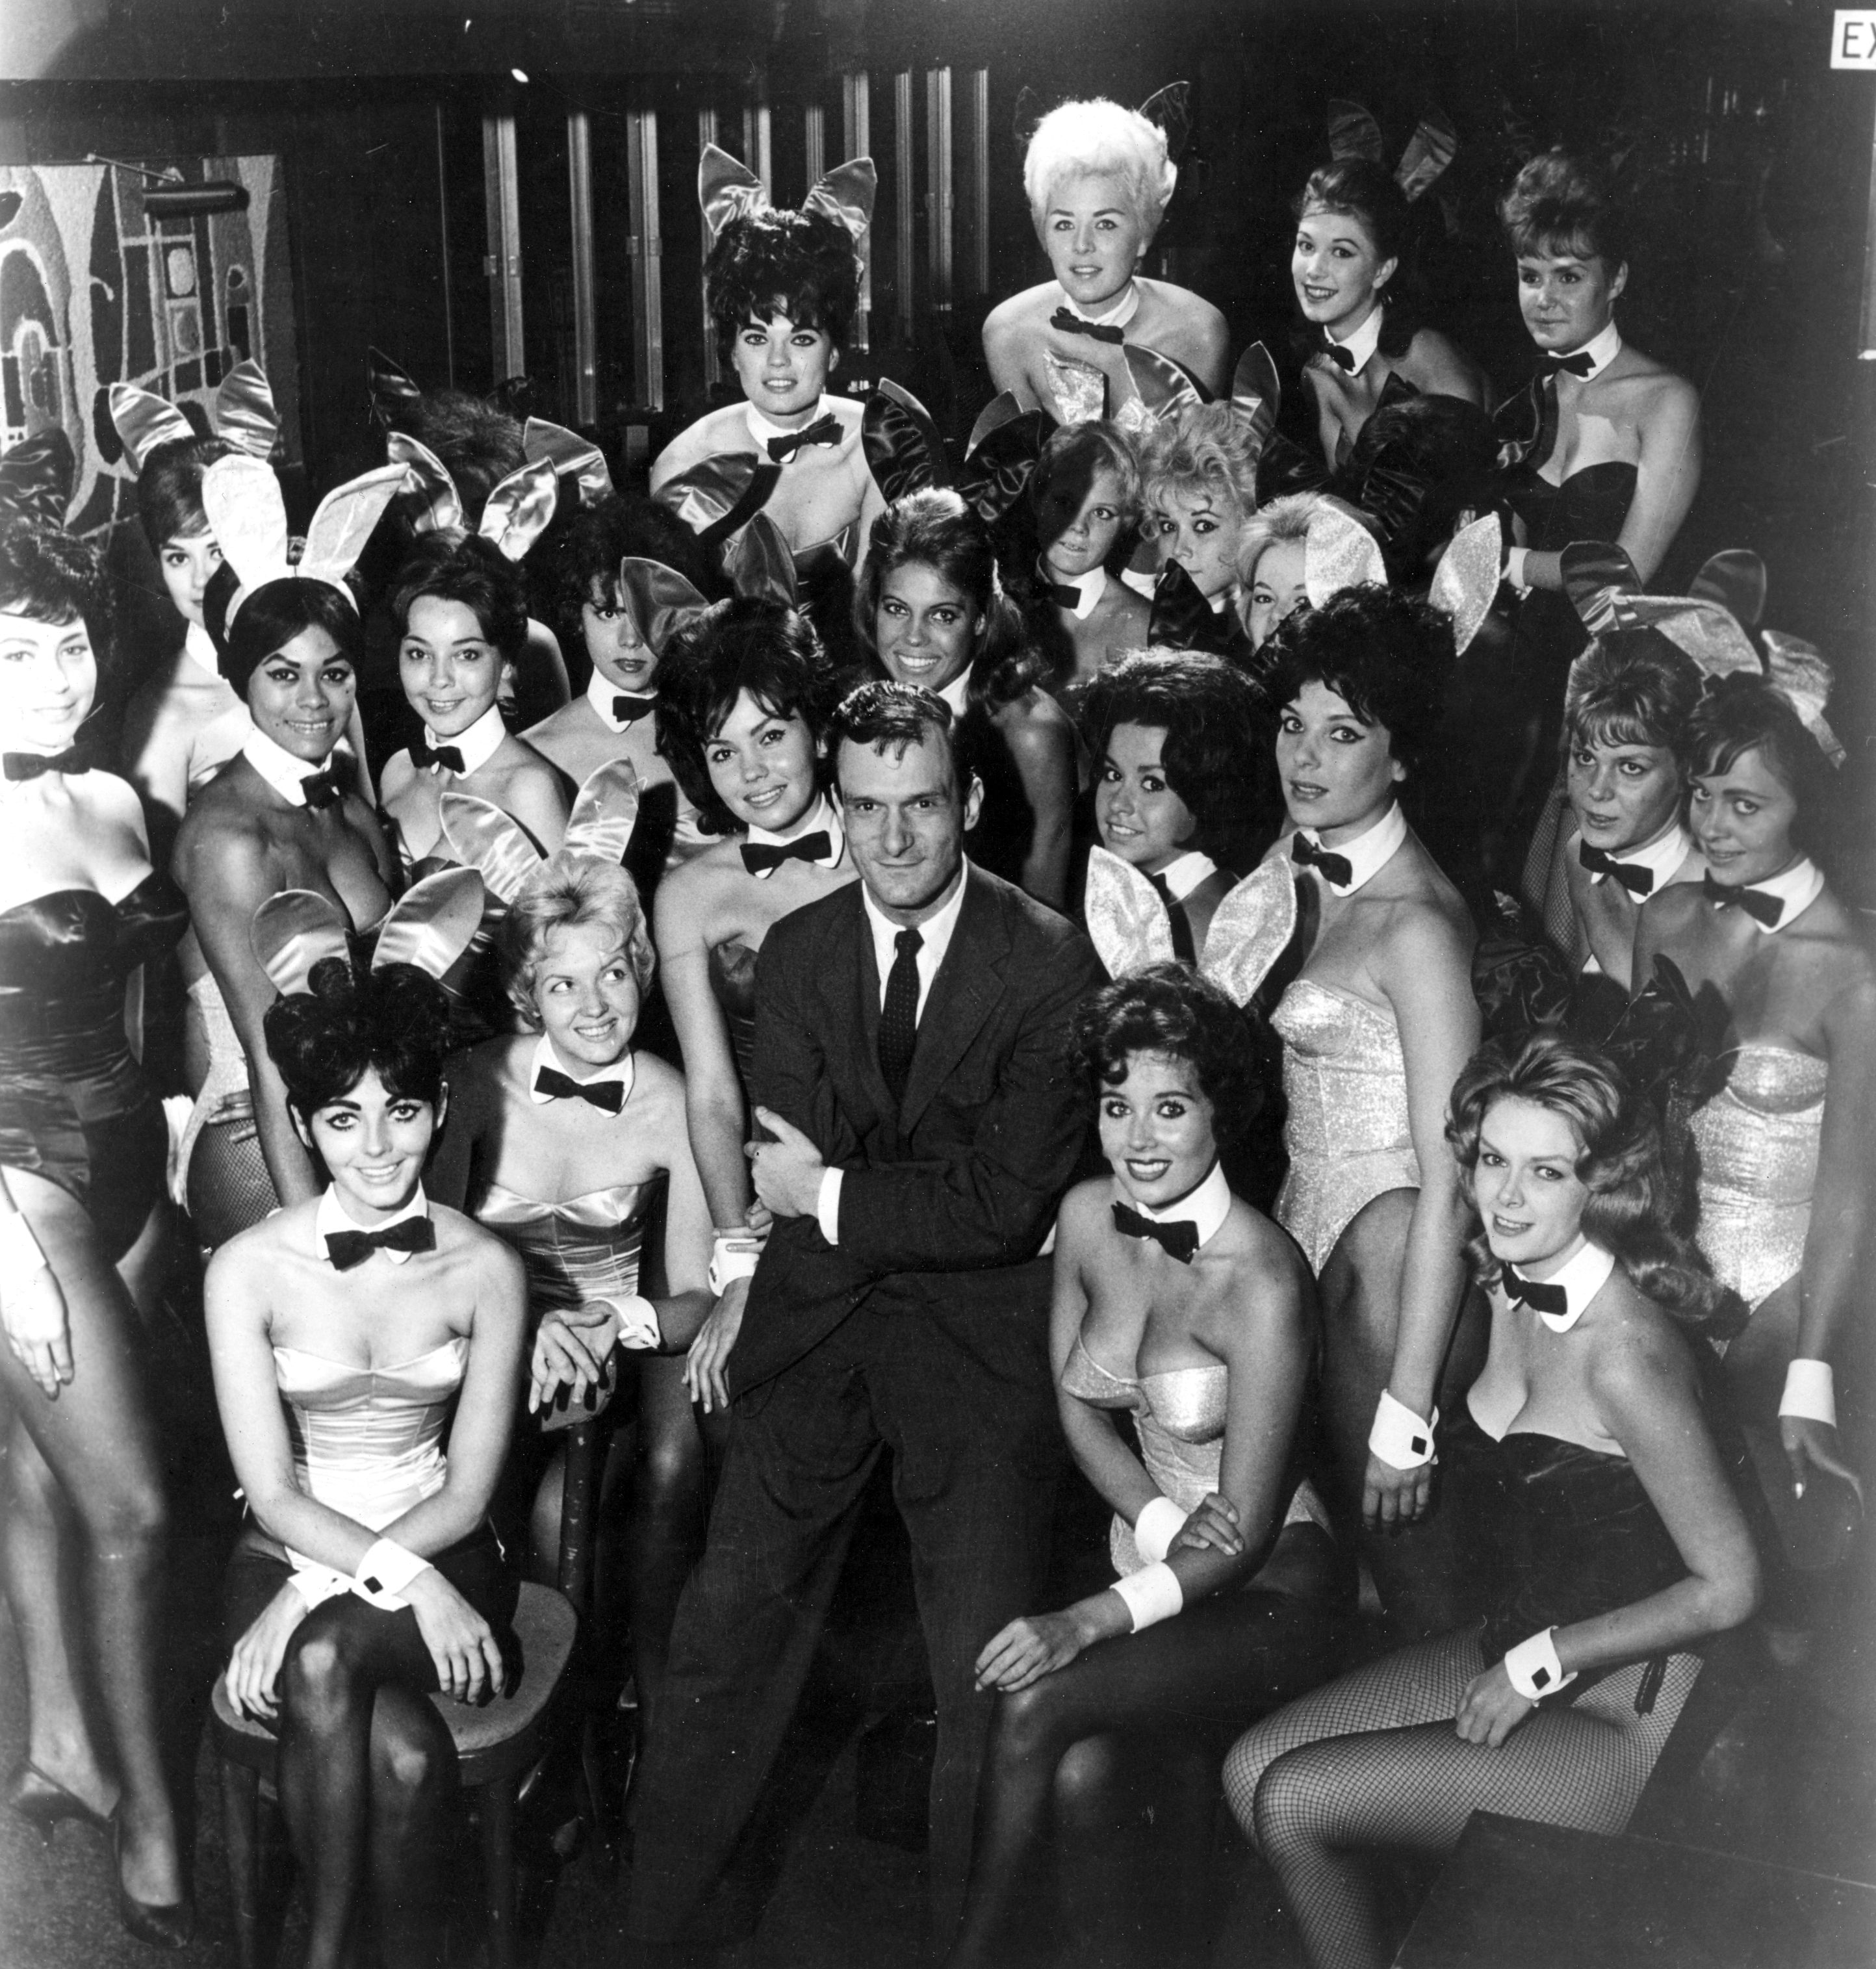 Hugh Hefner and bunny girls